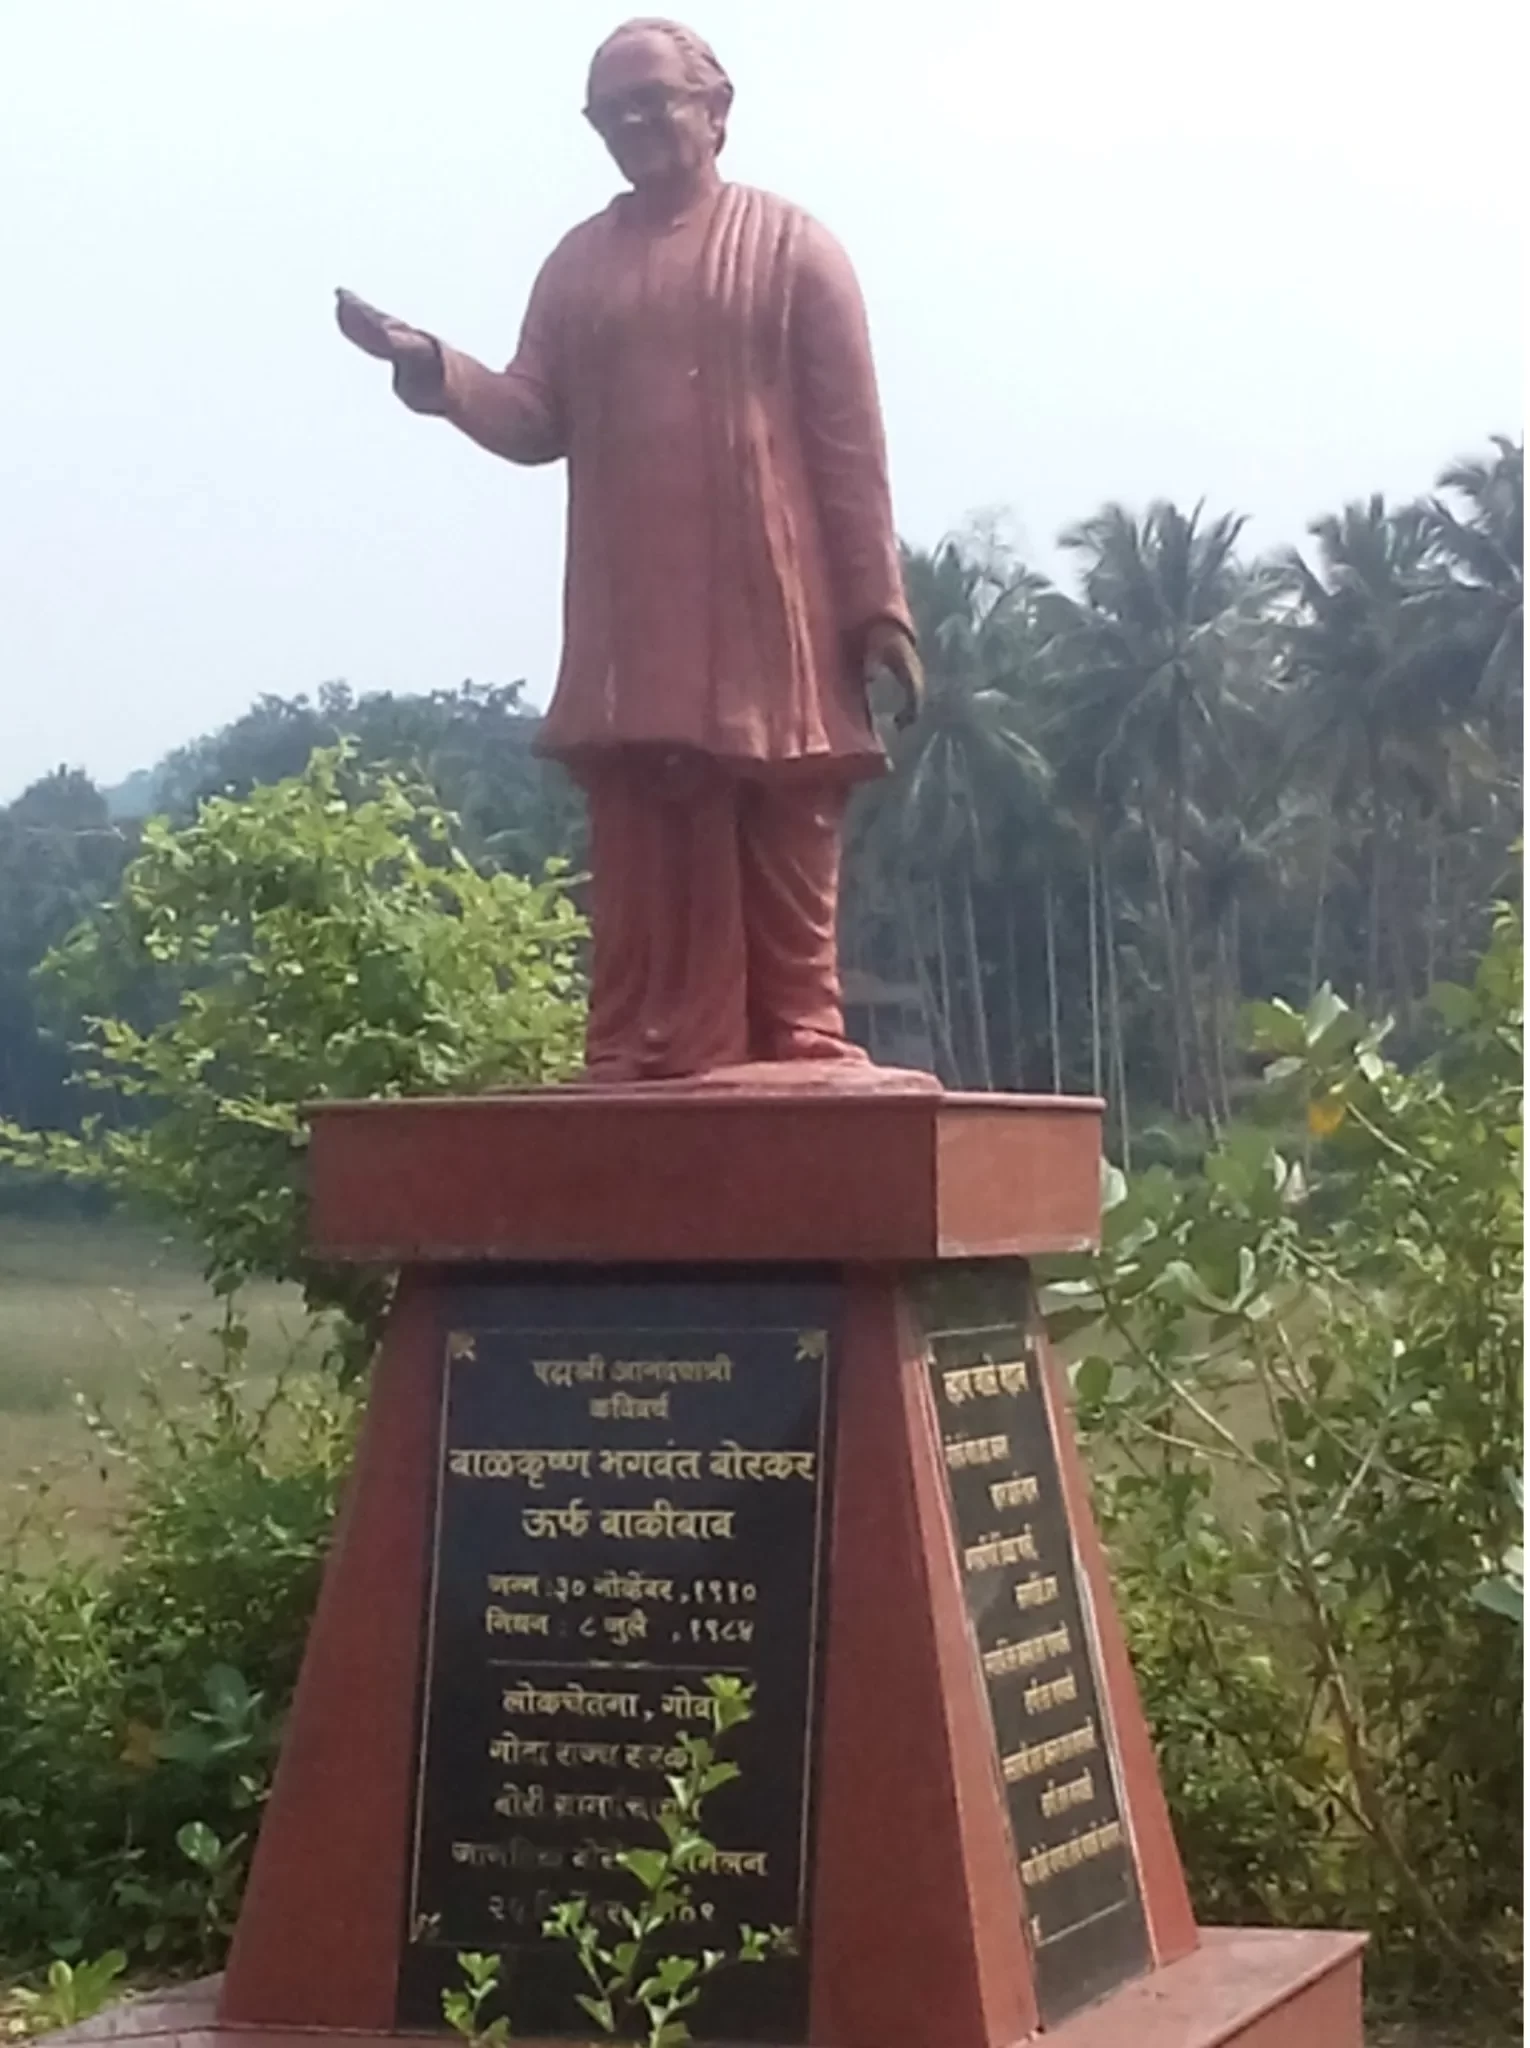 Balakrishna Bhagwant Borkar, Balkavi, Marathi poet, statue, Maharashtra, literary figure, poet's statue, cultural heritage, literary monument, Marathi Poets Legacy